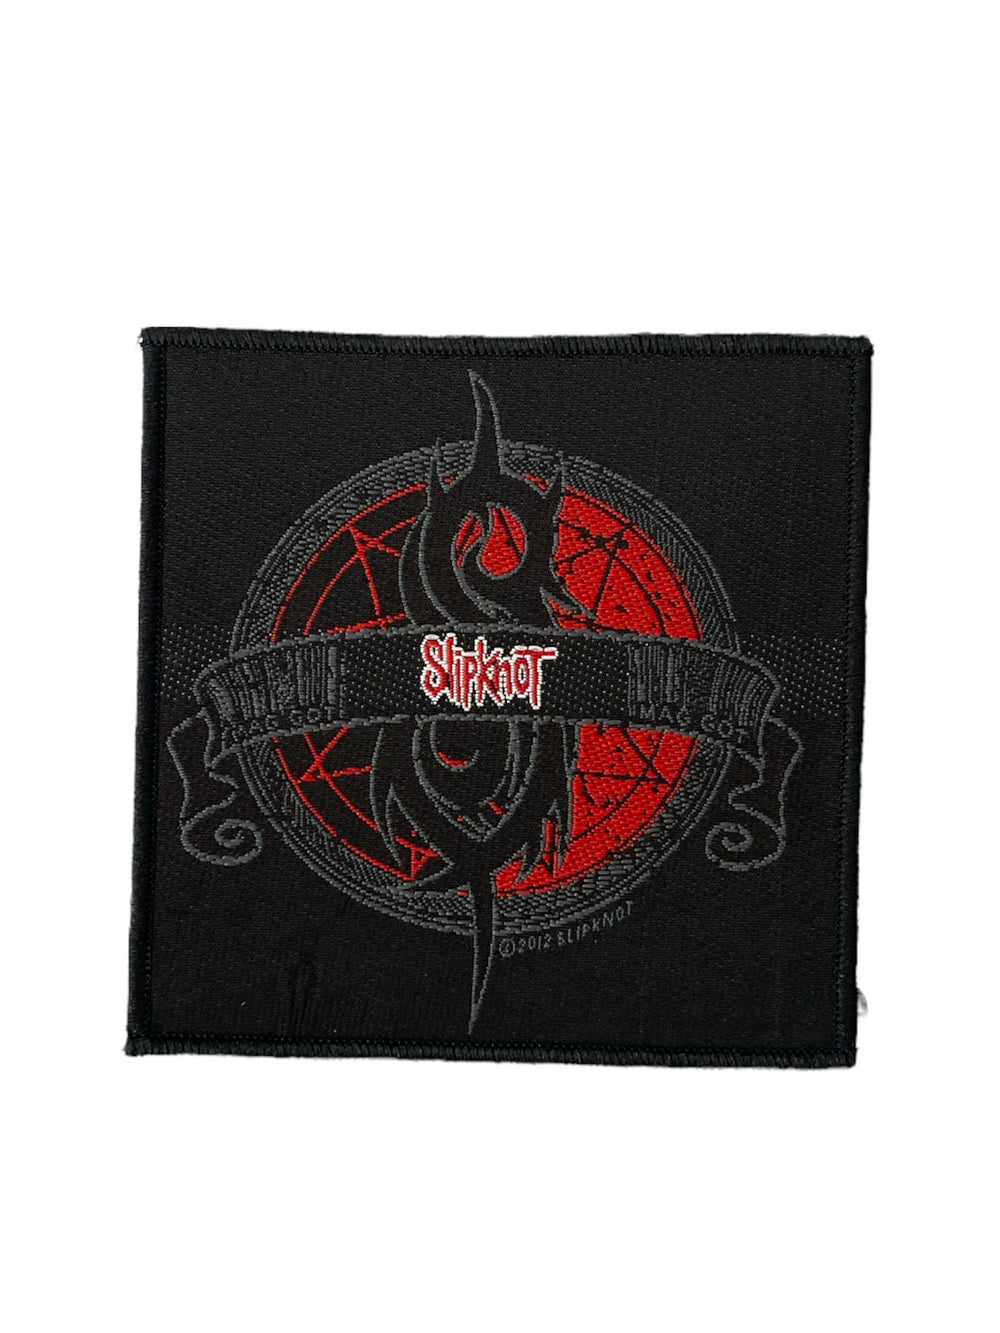 Slipknot Standard Patch: Crest Official Woven Patch Brand New